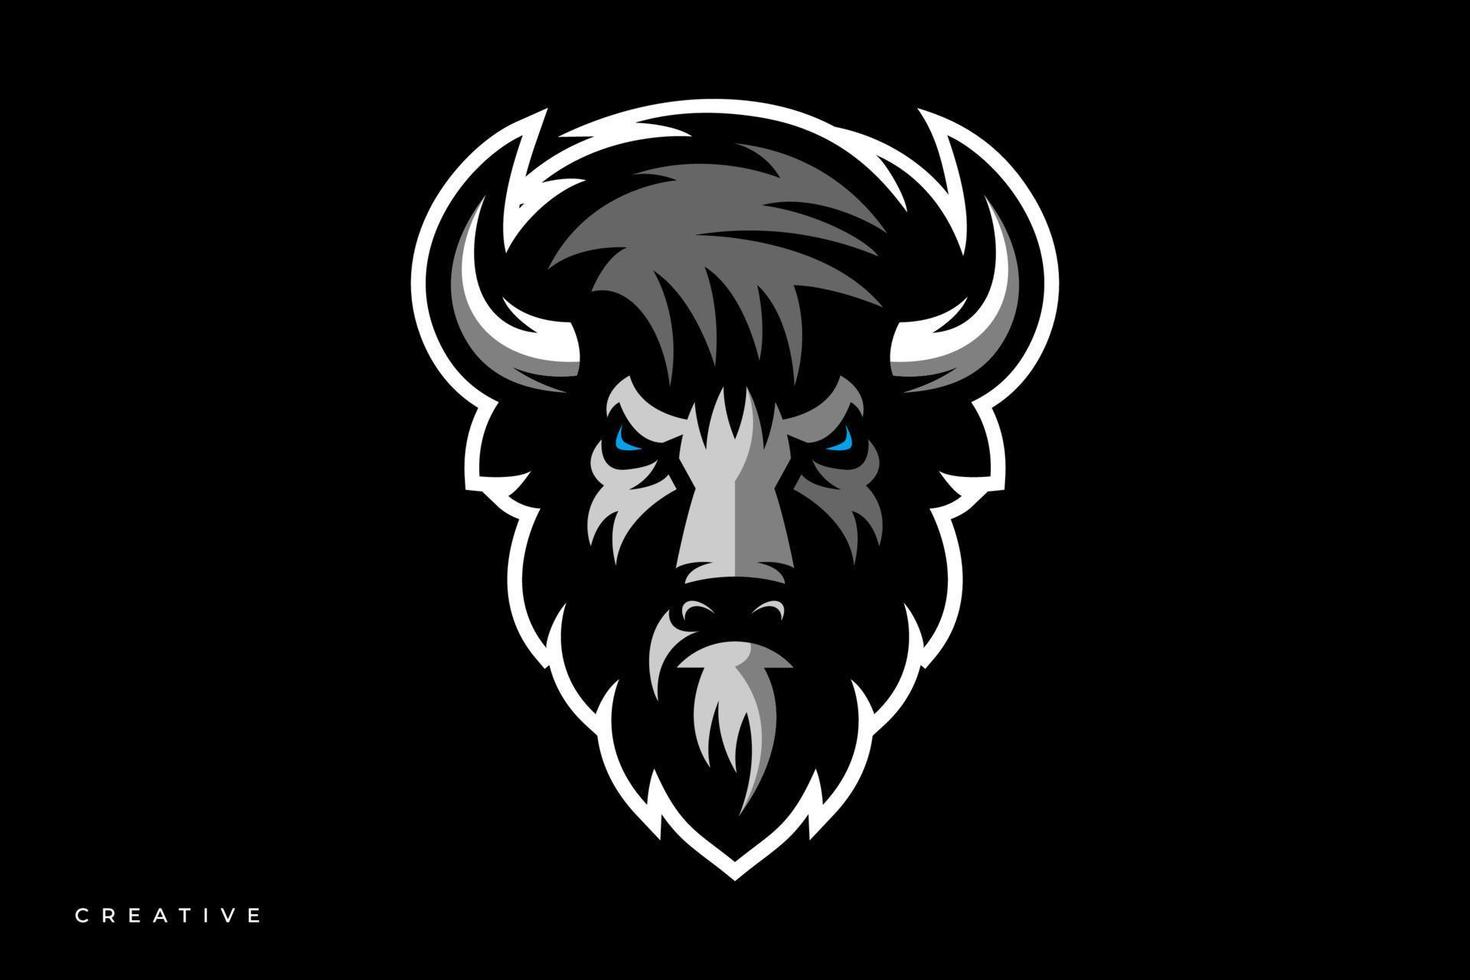 Bison esport logo on black background vector